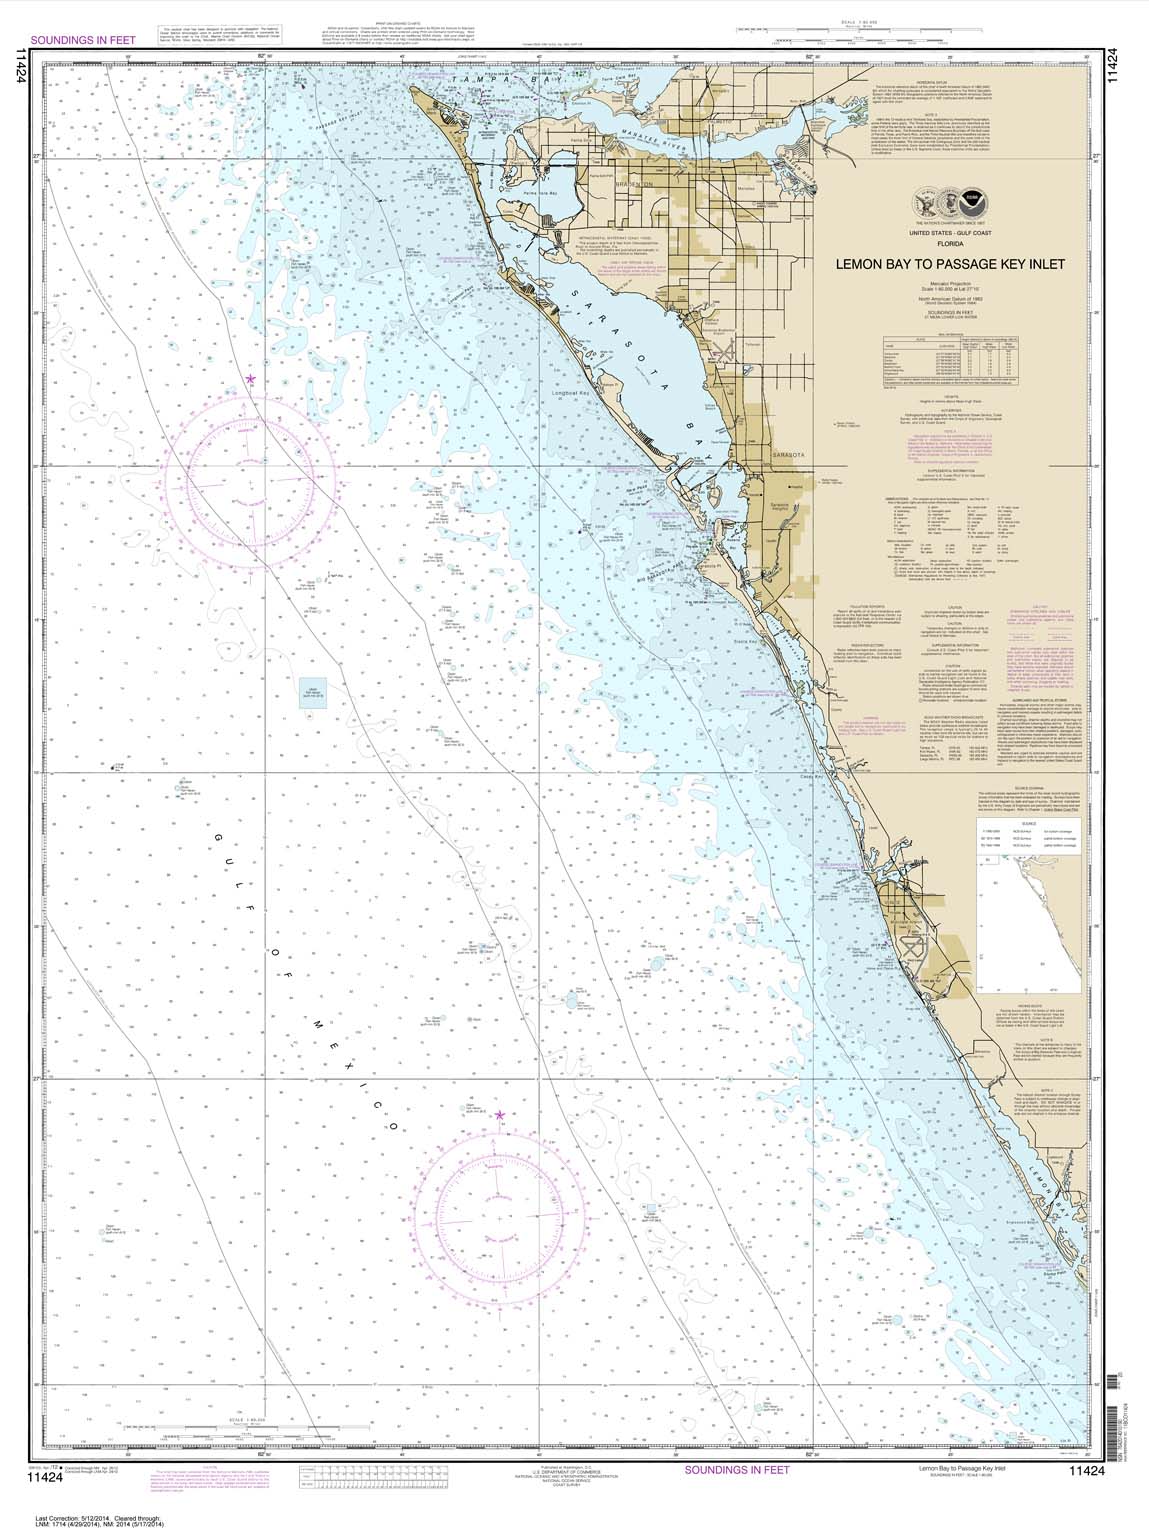 HISTORICAL NOAA Chart 11424: Lemon Bay to Passage Key Inlet